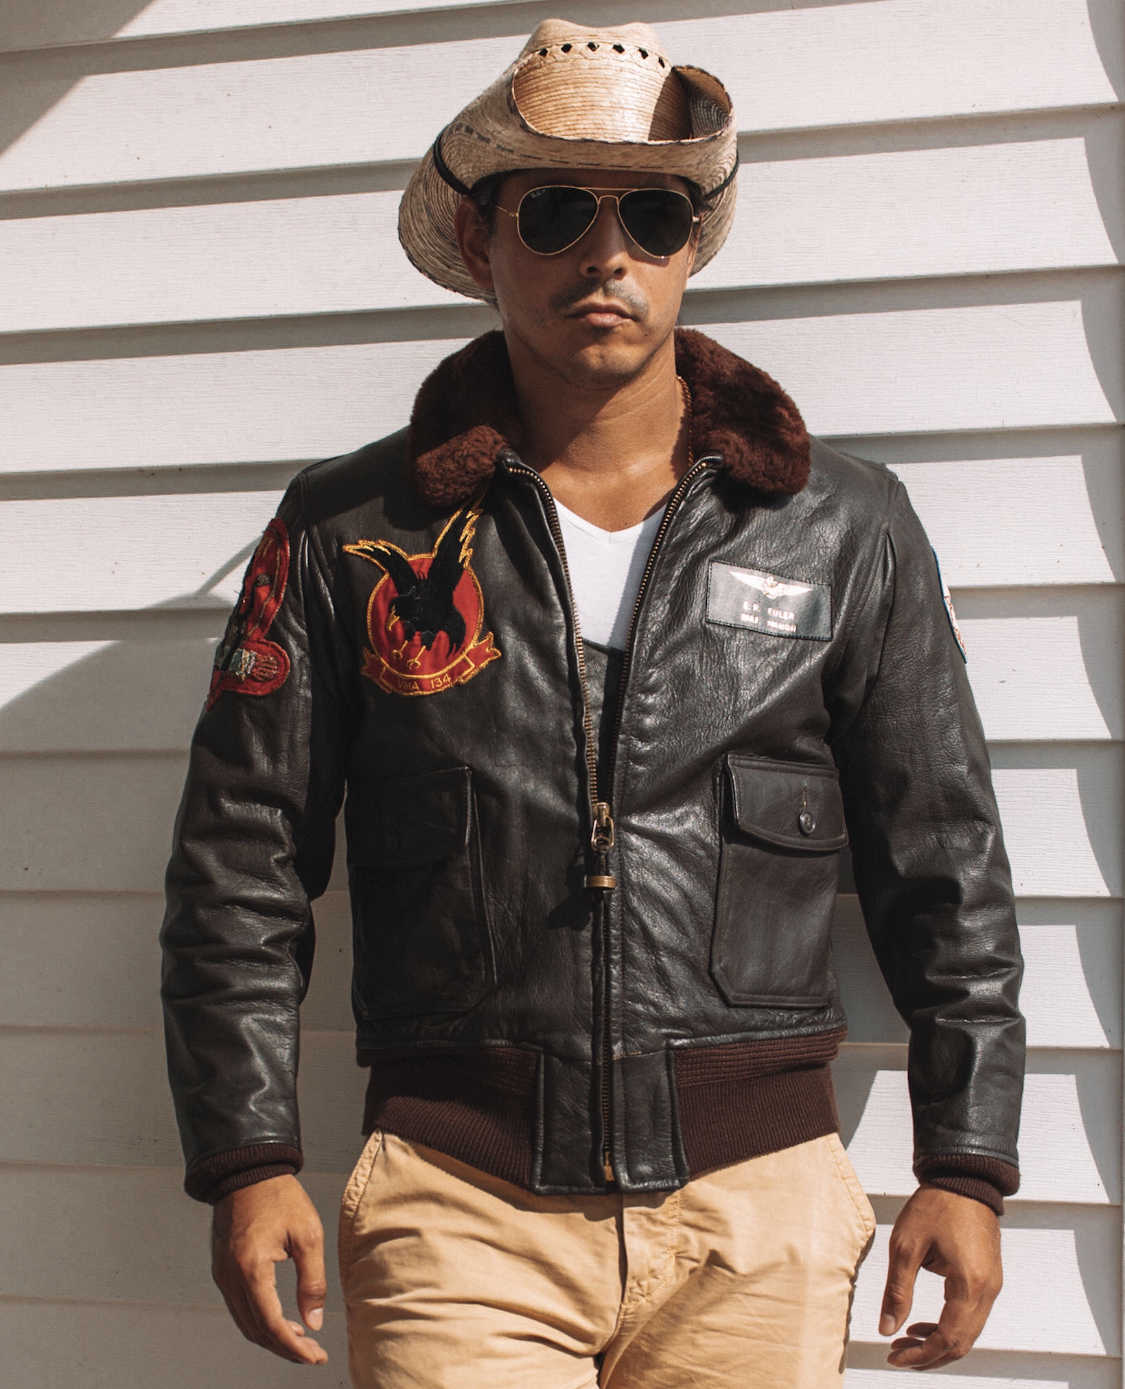 G-1 Jacket fit | Vintage Leather Jackets Forum